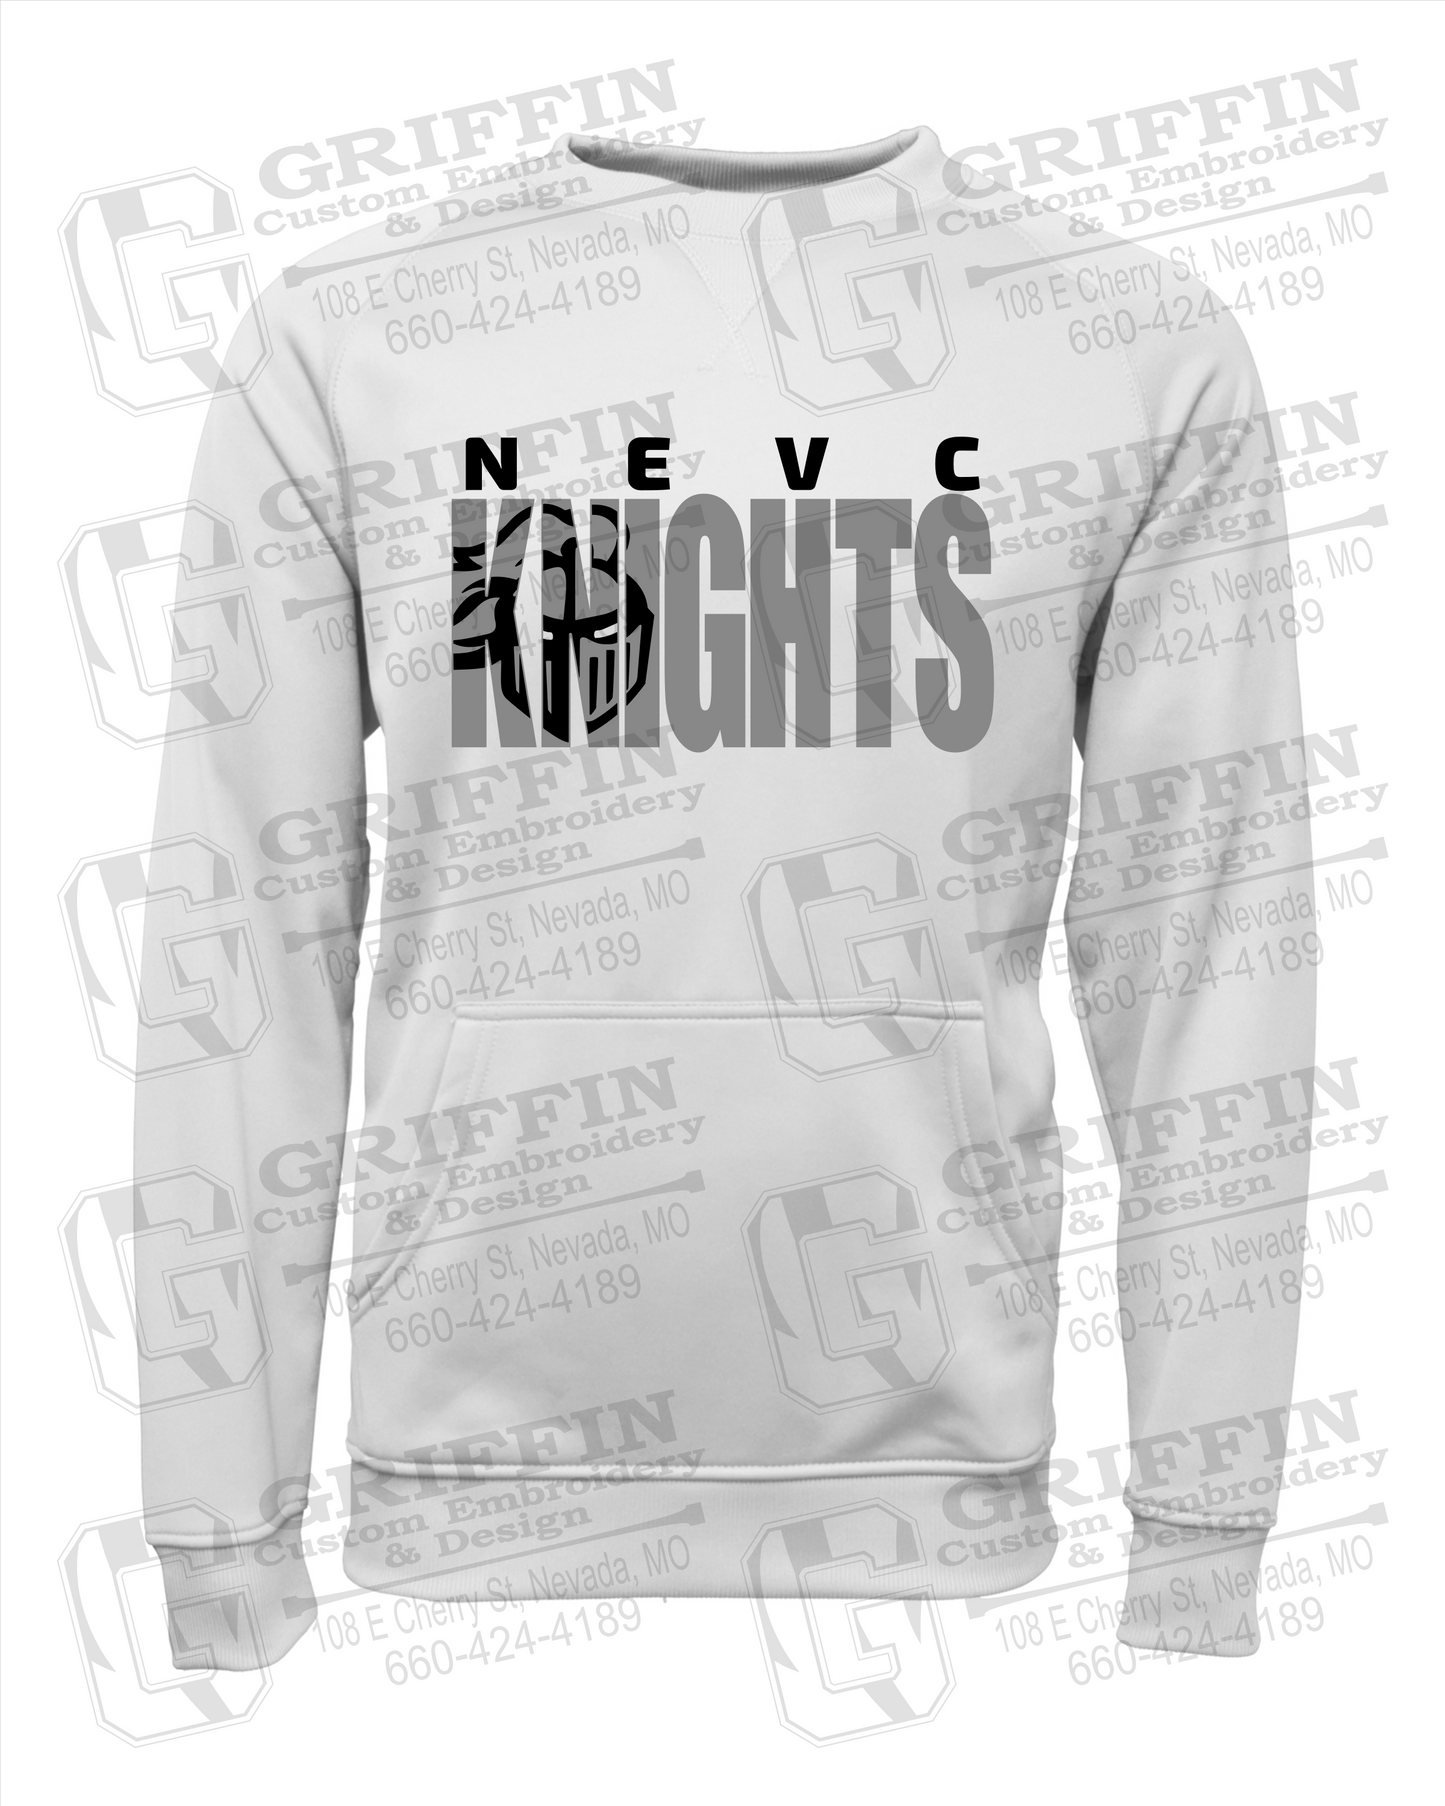 NEVC Knights 23-B Sweatshirt